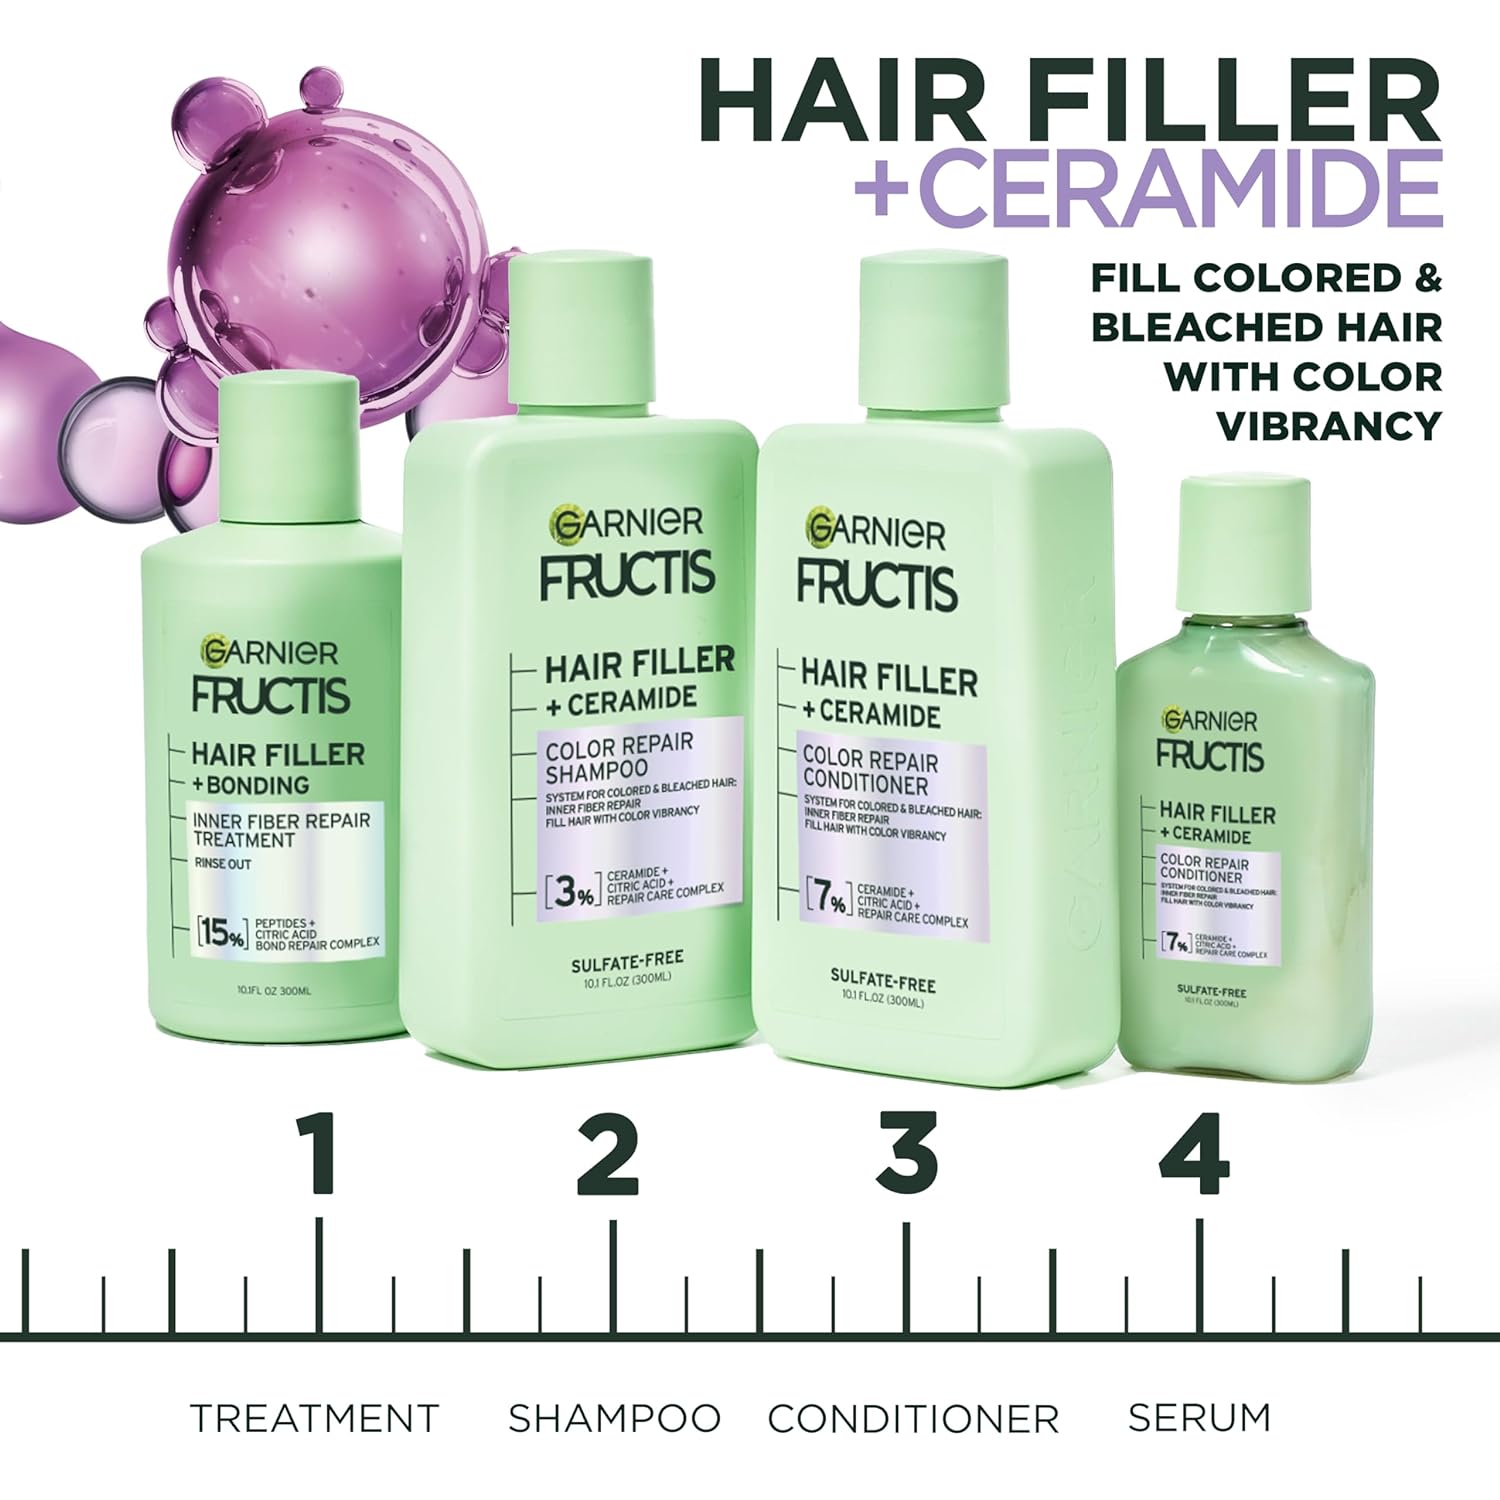 Garnier Fructis Hair Filler Color Repair Shampoo with Ceramide, 10.1 FL OZ, 1 Count : Beauty & Personal Care